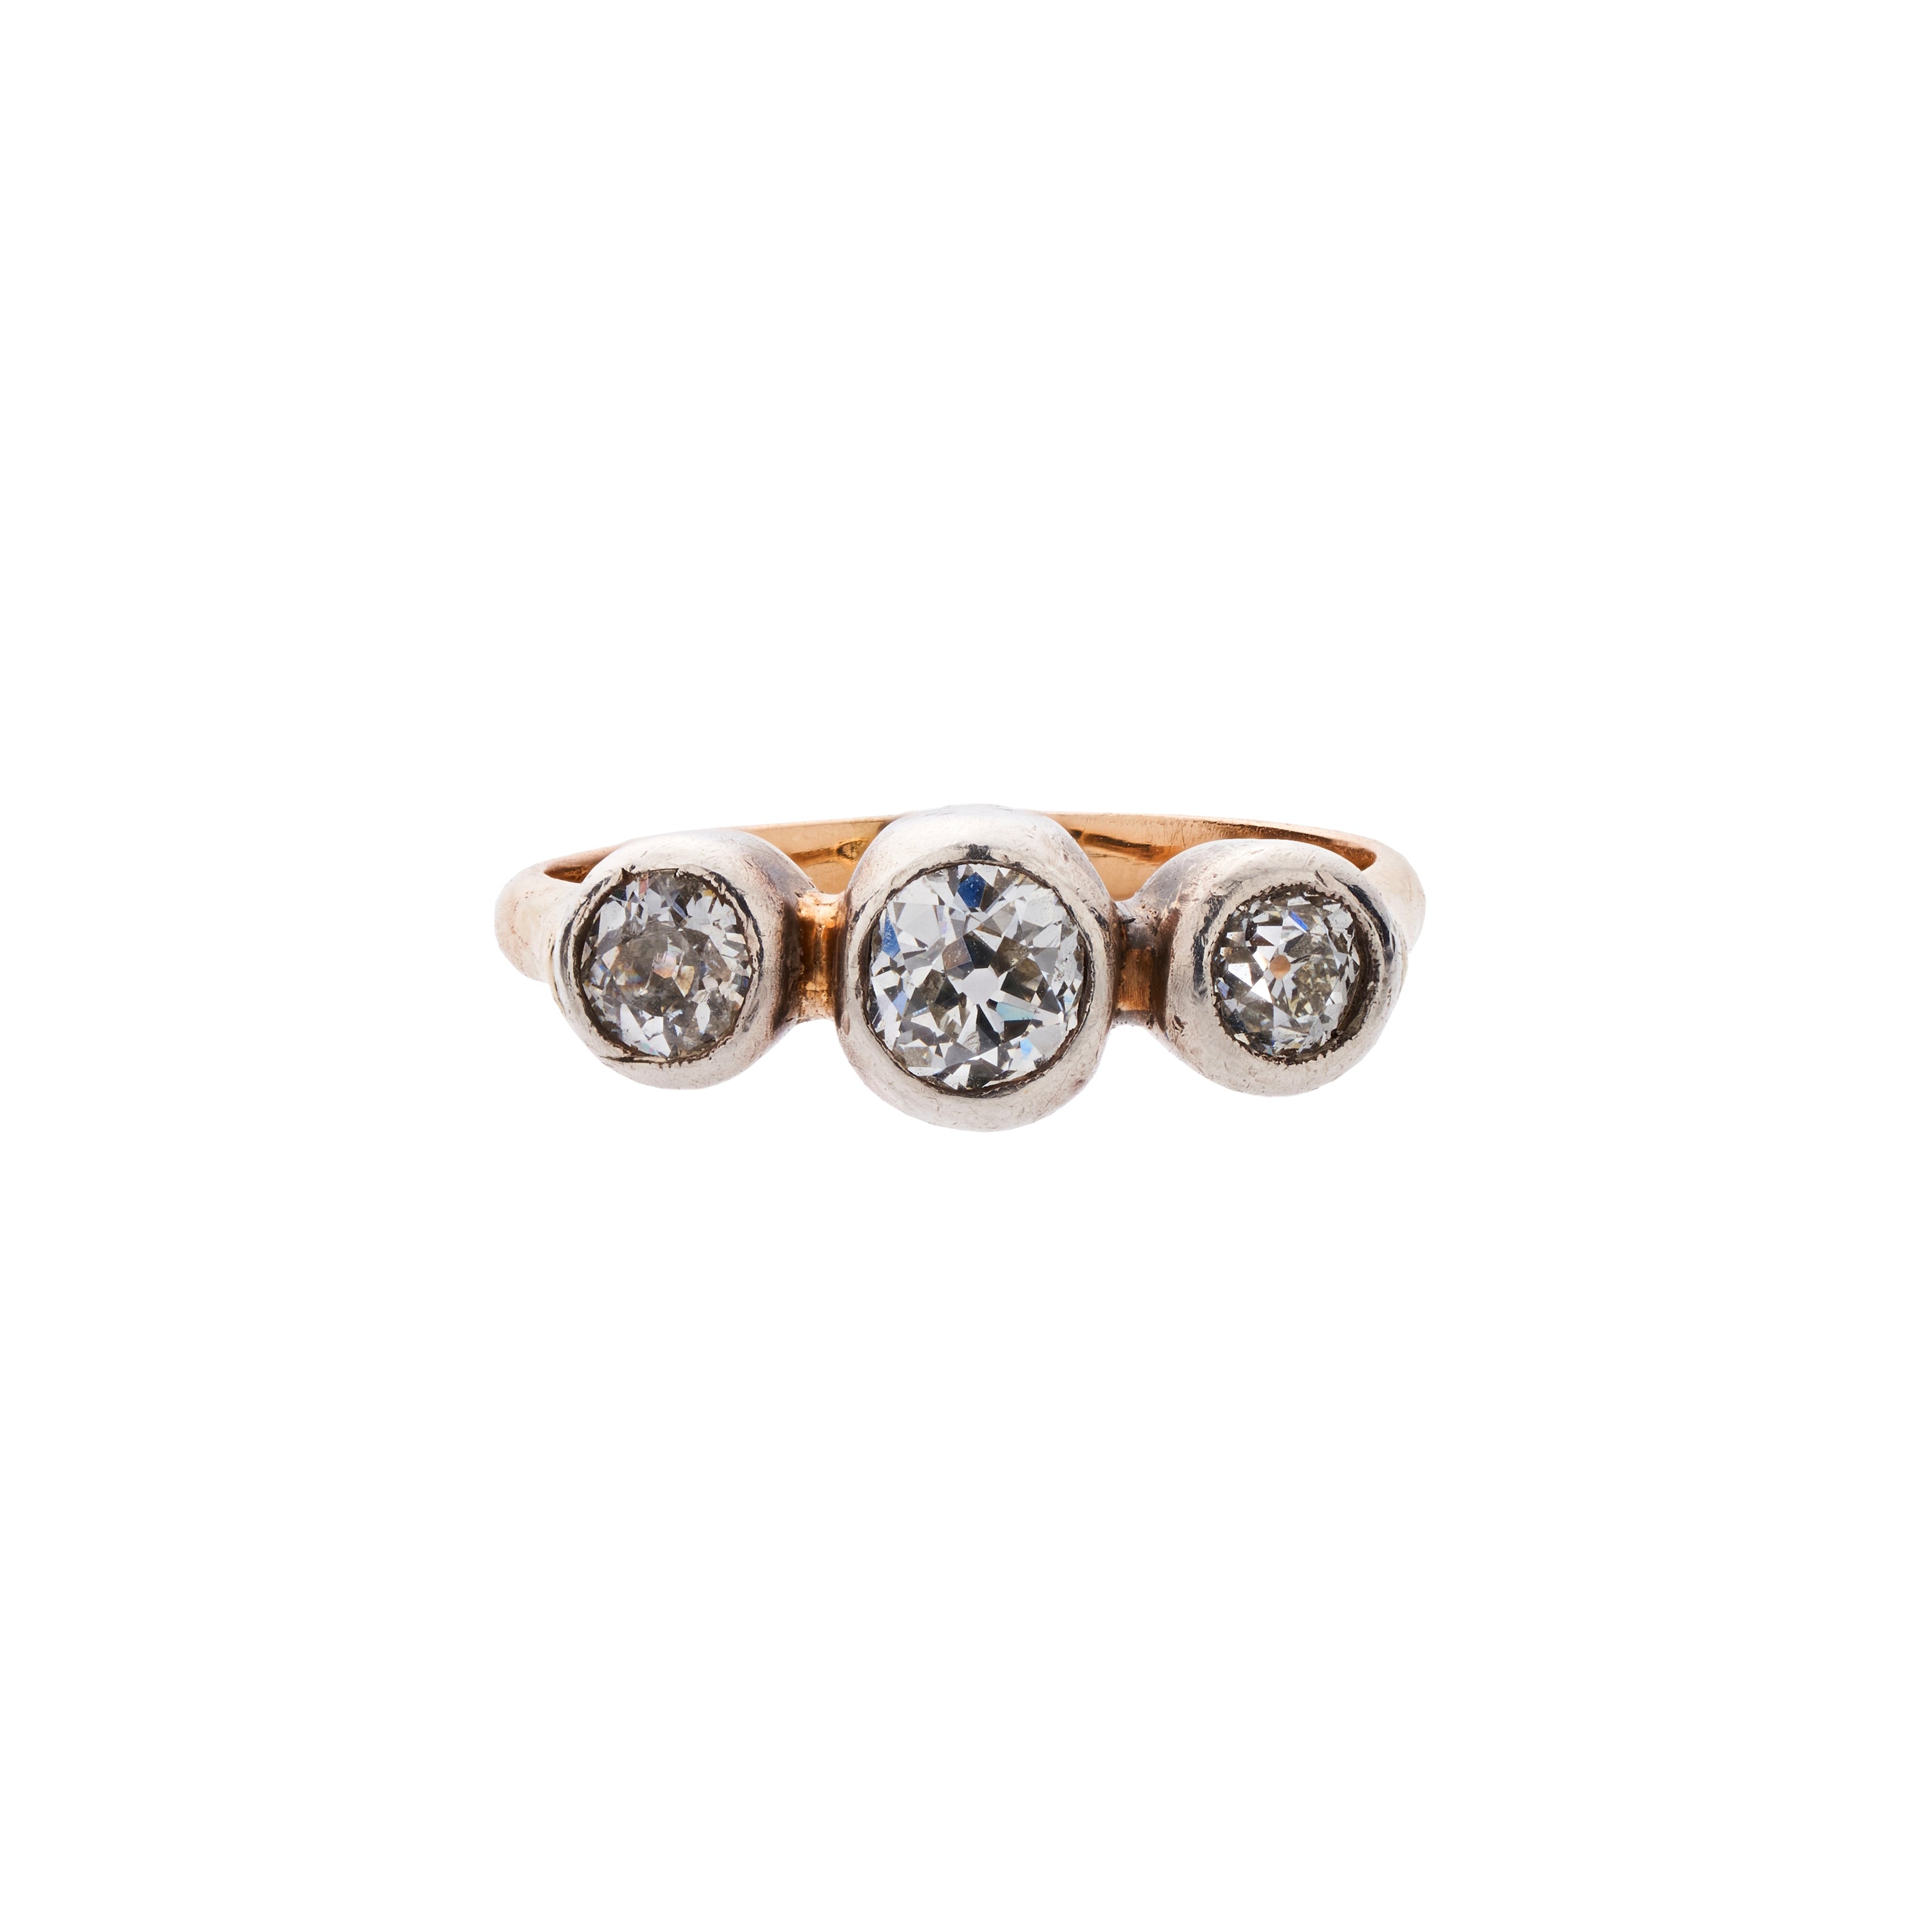 Antique Victorian Rose Gold & Silver Three Diamond Ring